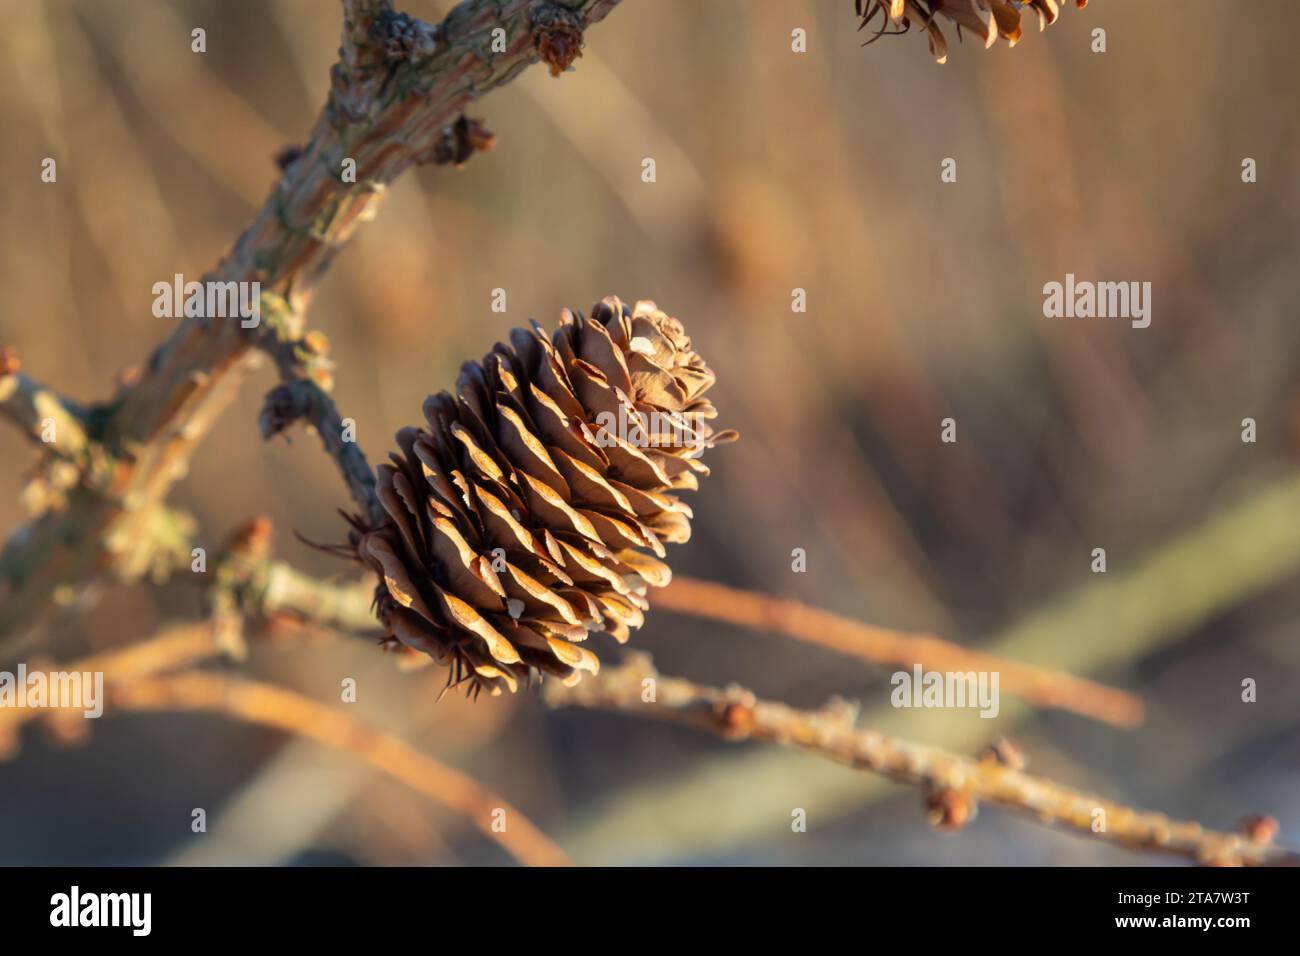 European larch, Larix decidua, tree, detail of branch with cones in winter. Stock Photo